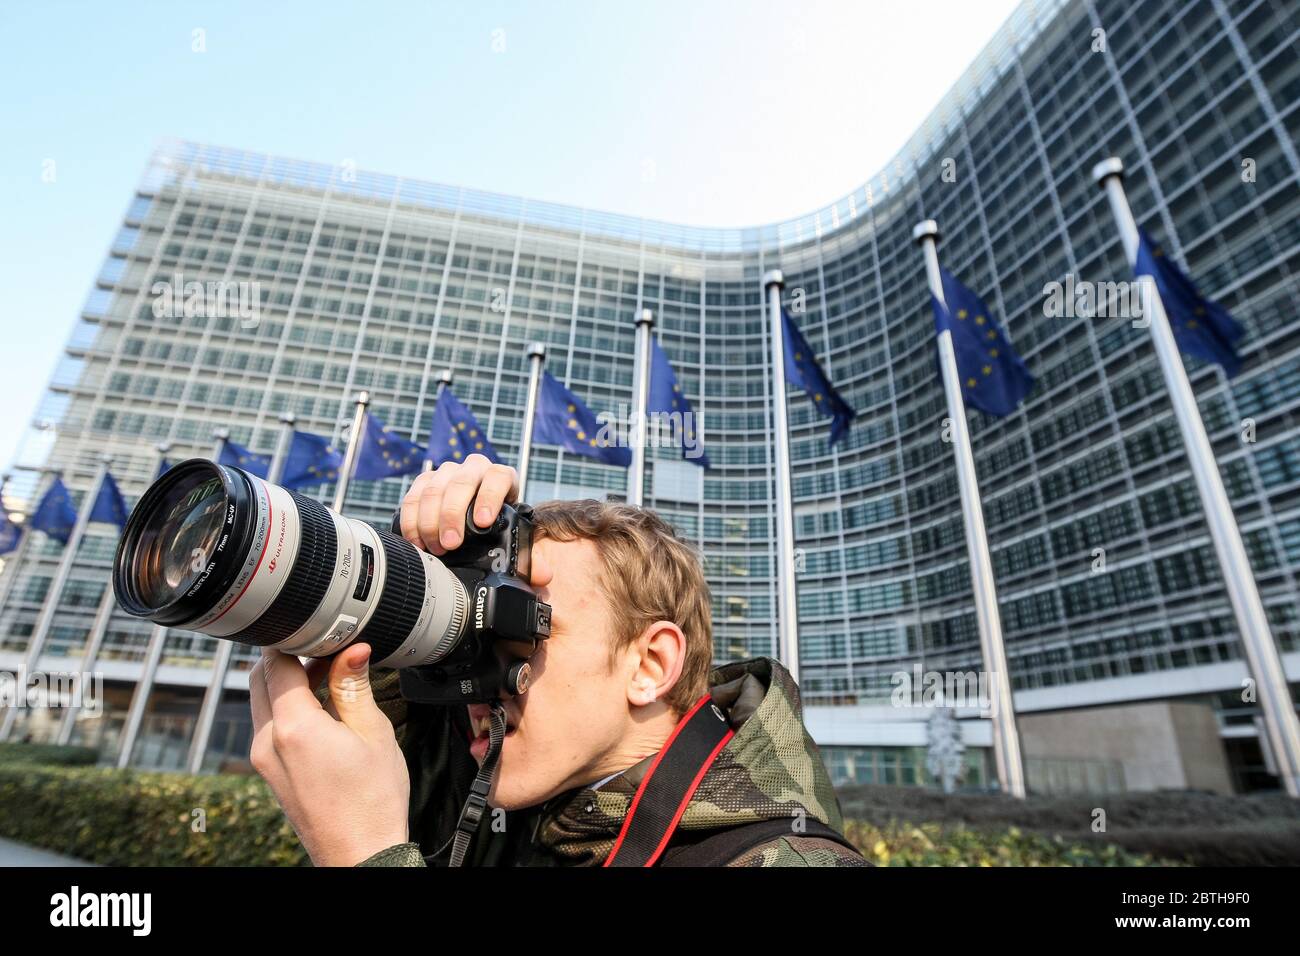 EU Flags outside The European Parliament, Brussels, Belgium - 02 Mar 2011 Stock Photo